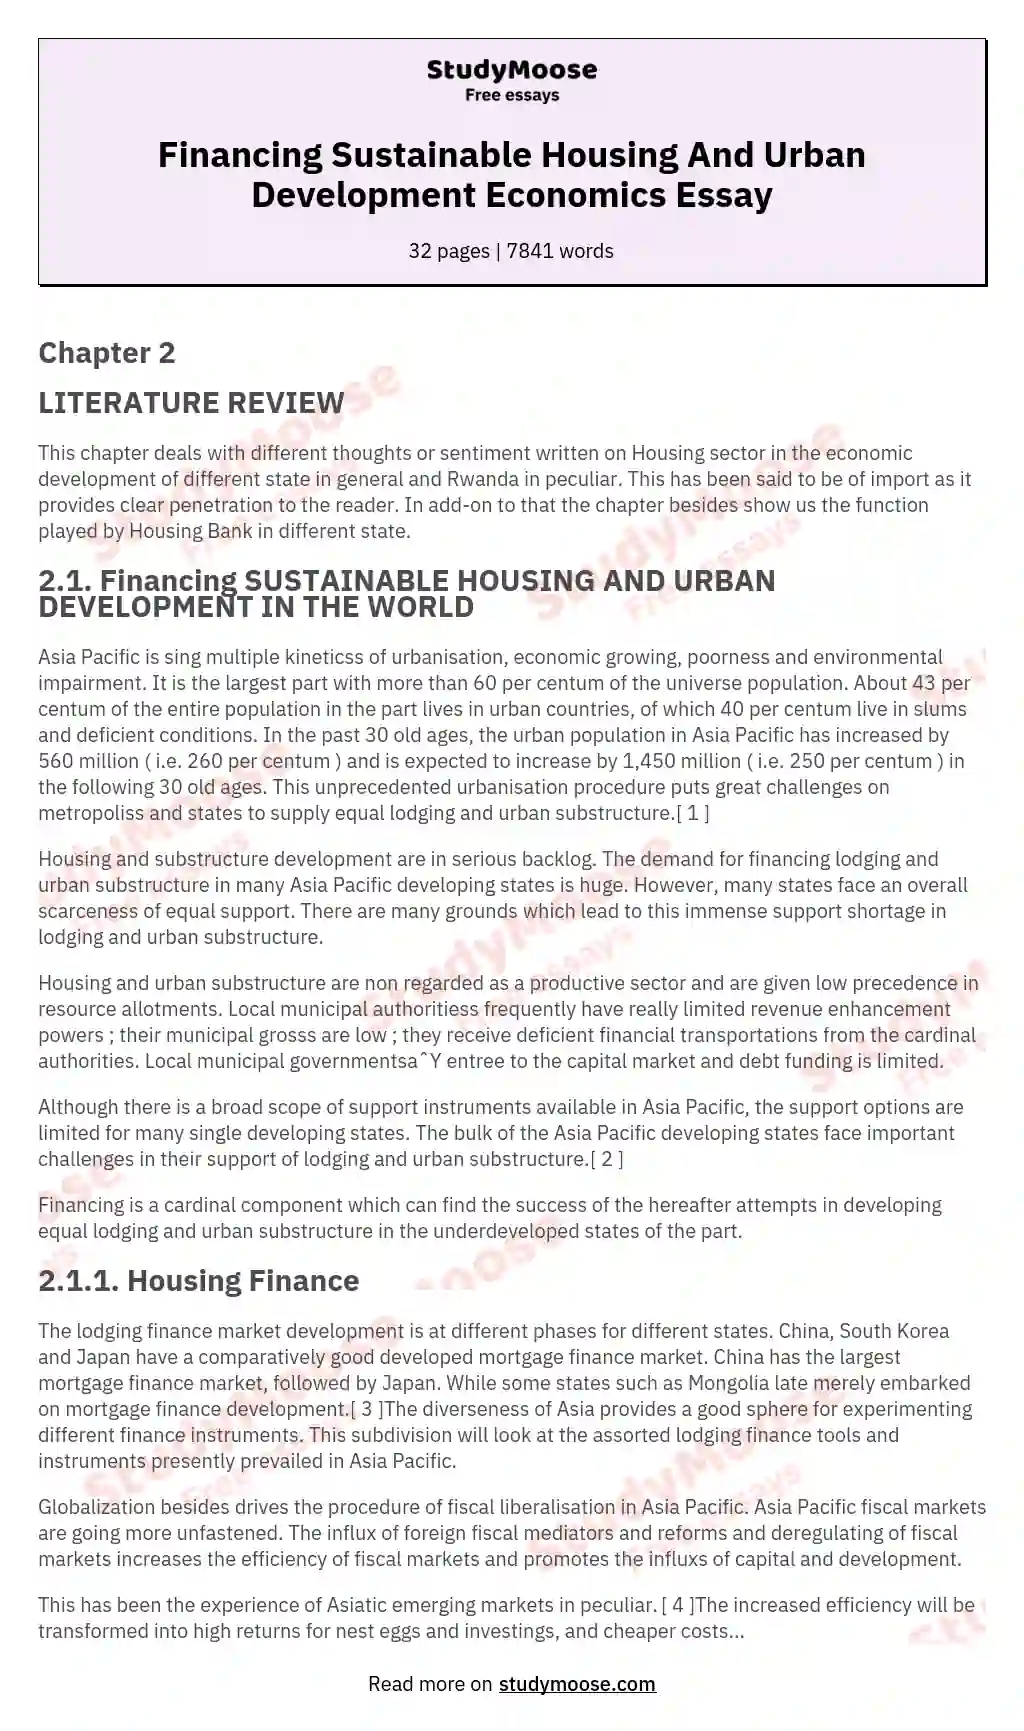 Financing Sustainable Housing And Urban Development Economics Essay